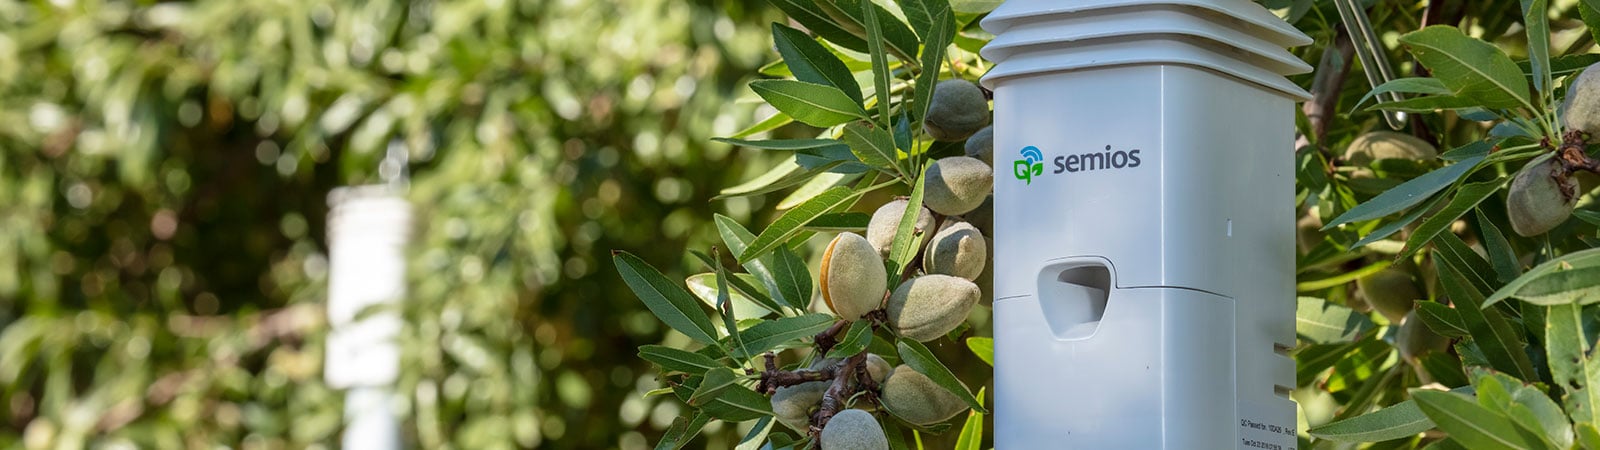 Semios pheromone dispenser in an almond orchard